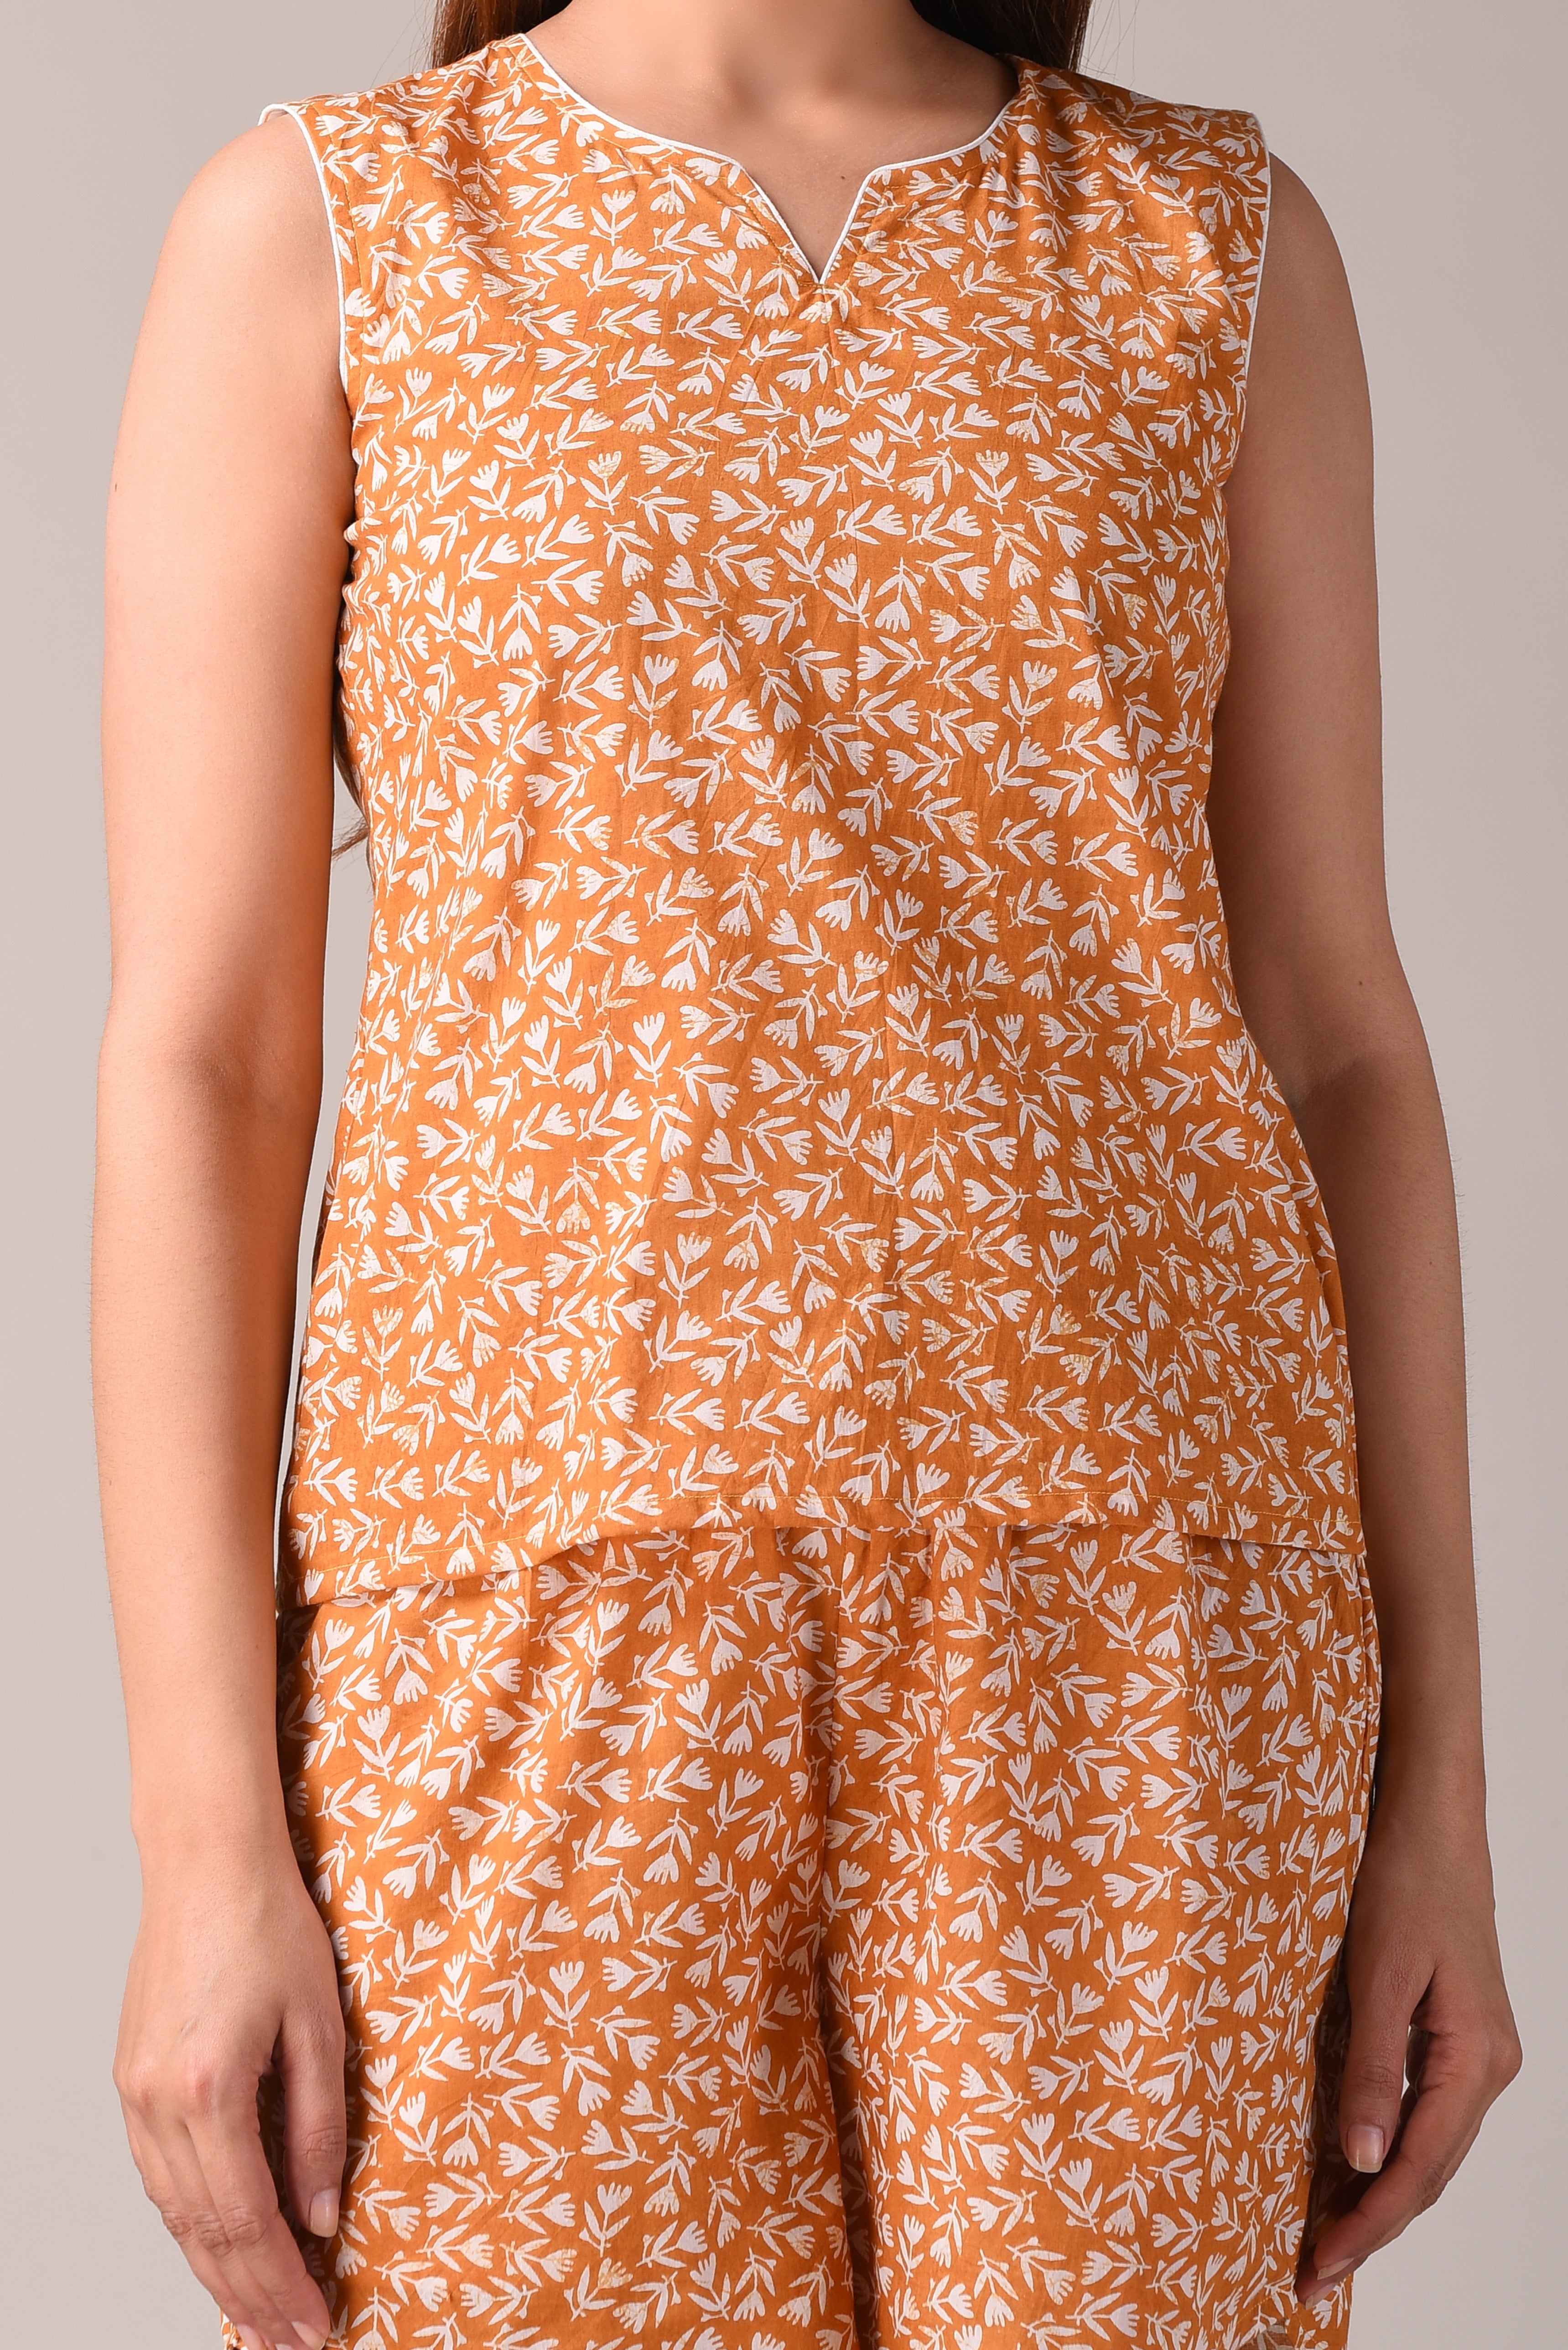 Orange Paisley Printed Pure Cotton Nightsuit and Loungewear (Top & Shorts Set)